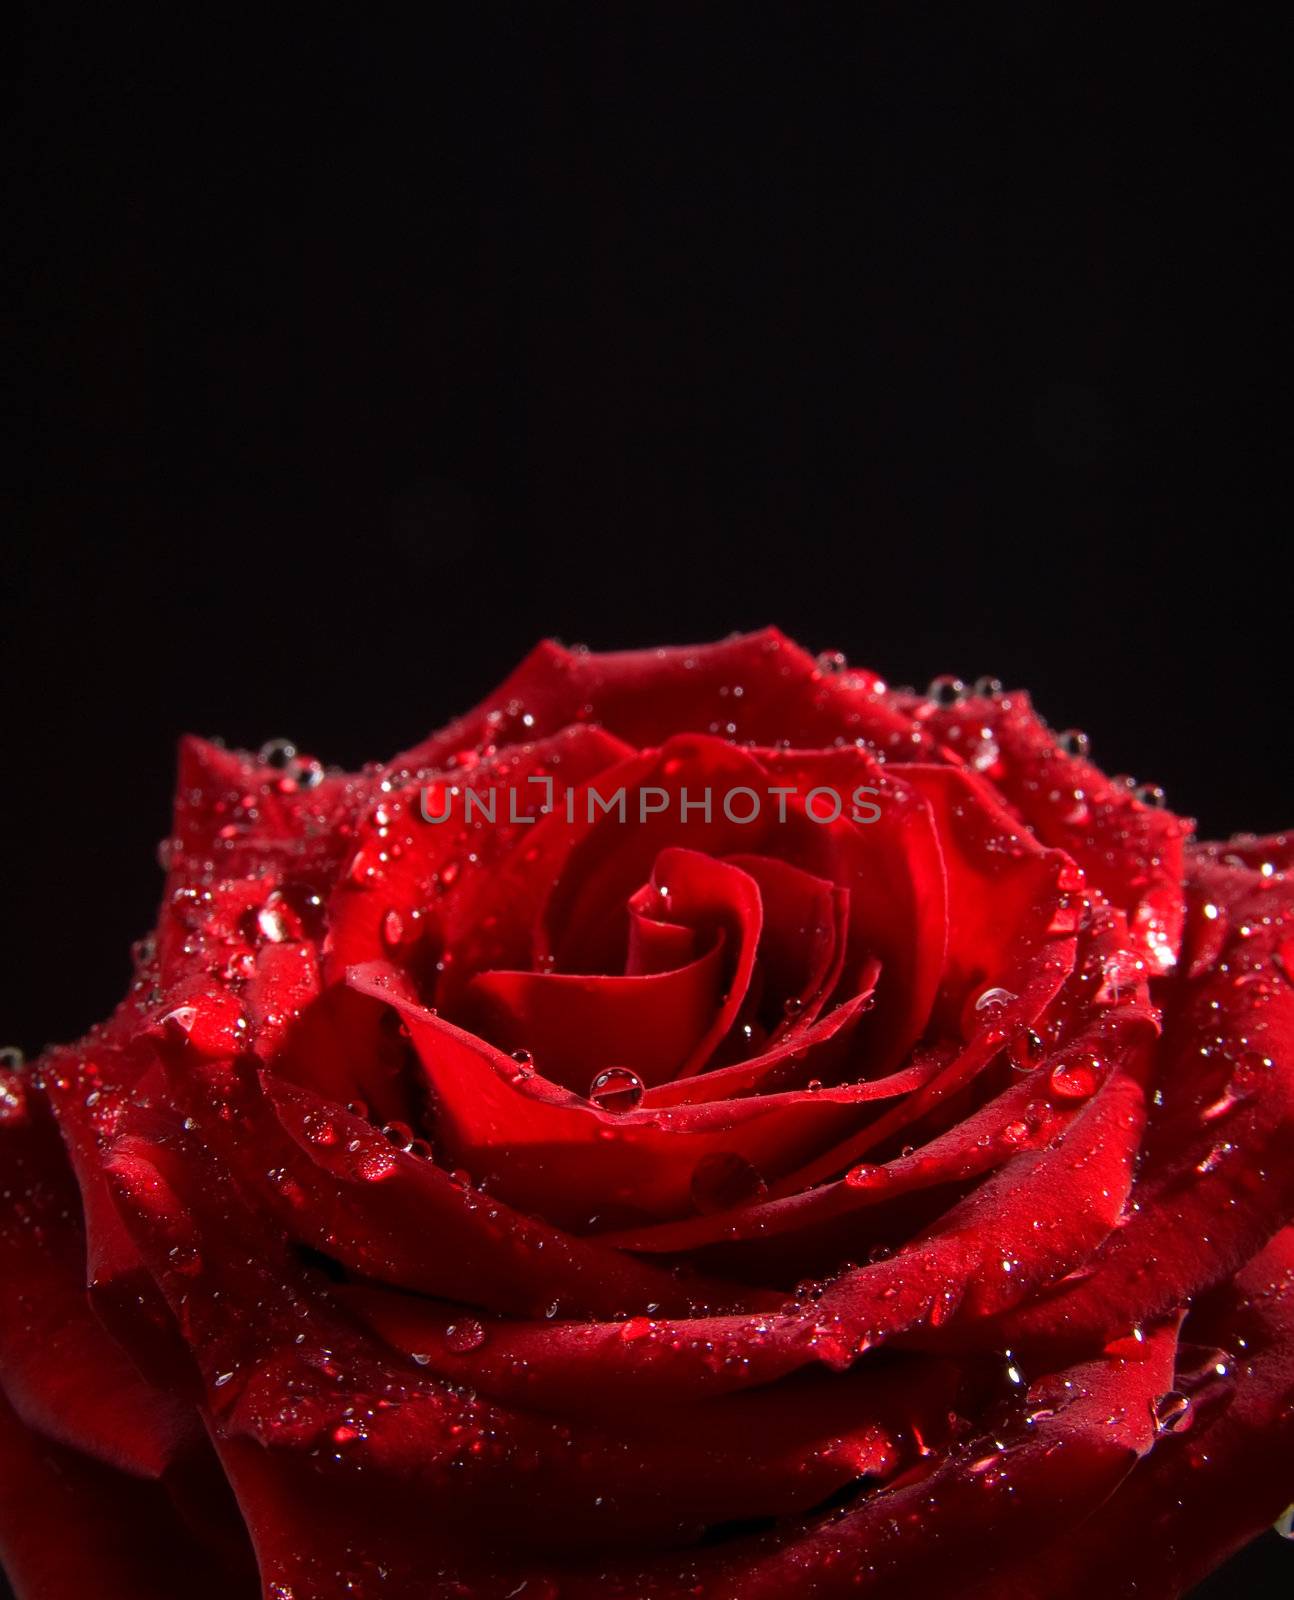 rose on a black background by motorolka